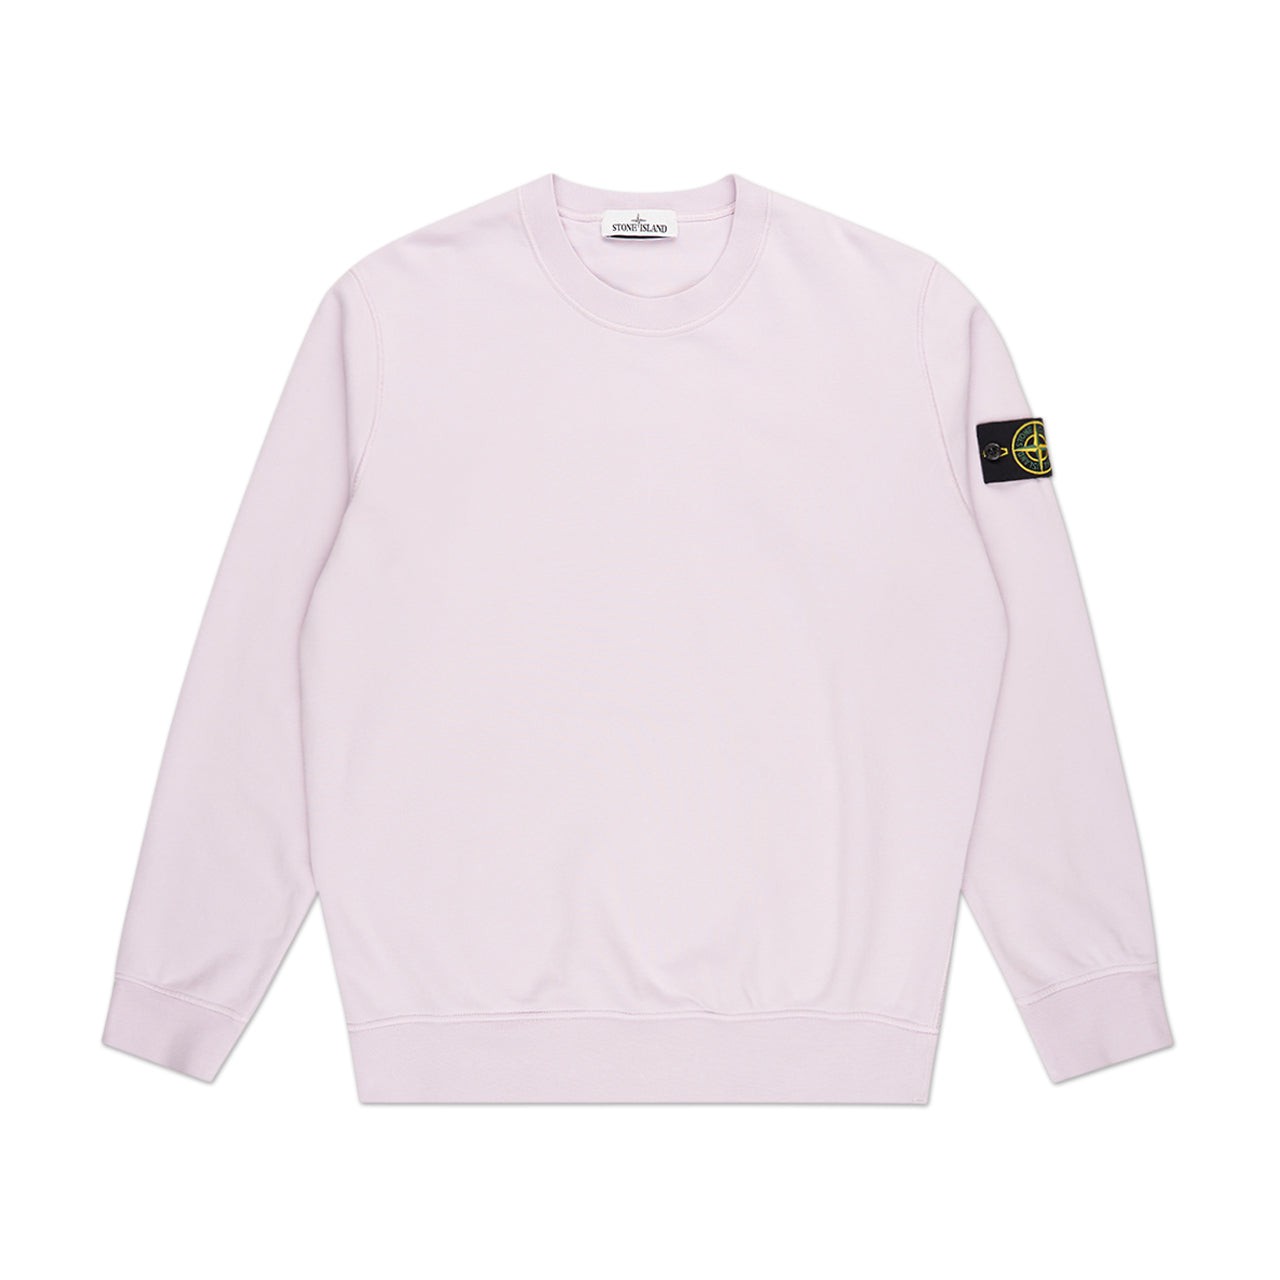 stone island stone island sweatshirt (pink)